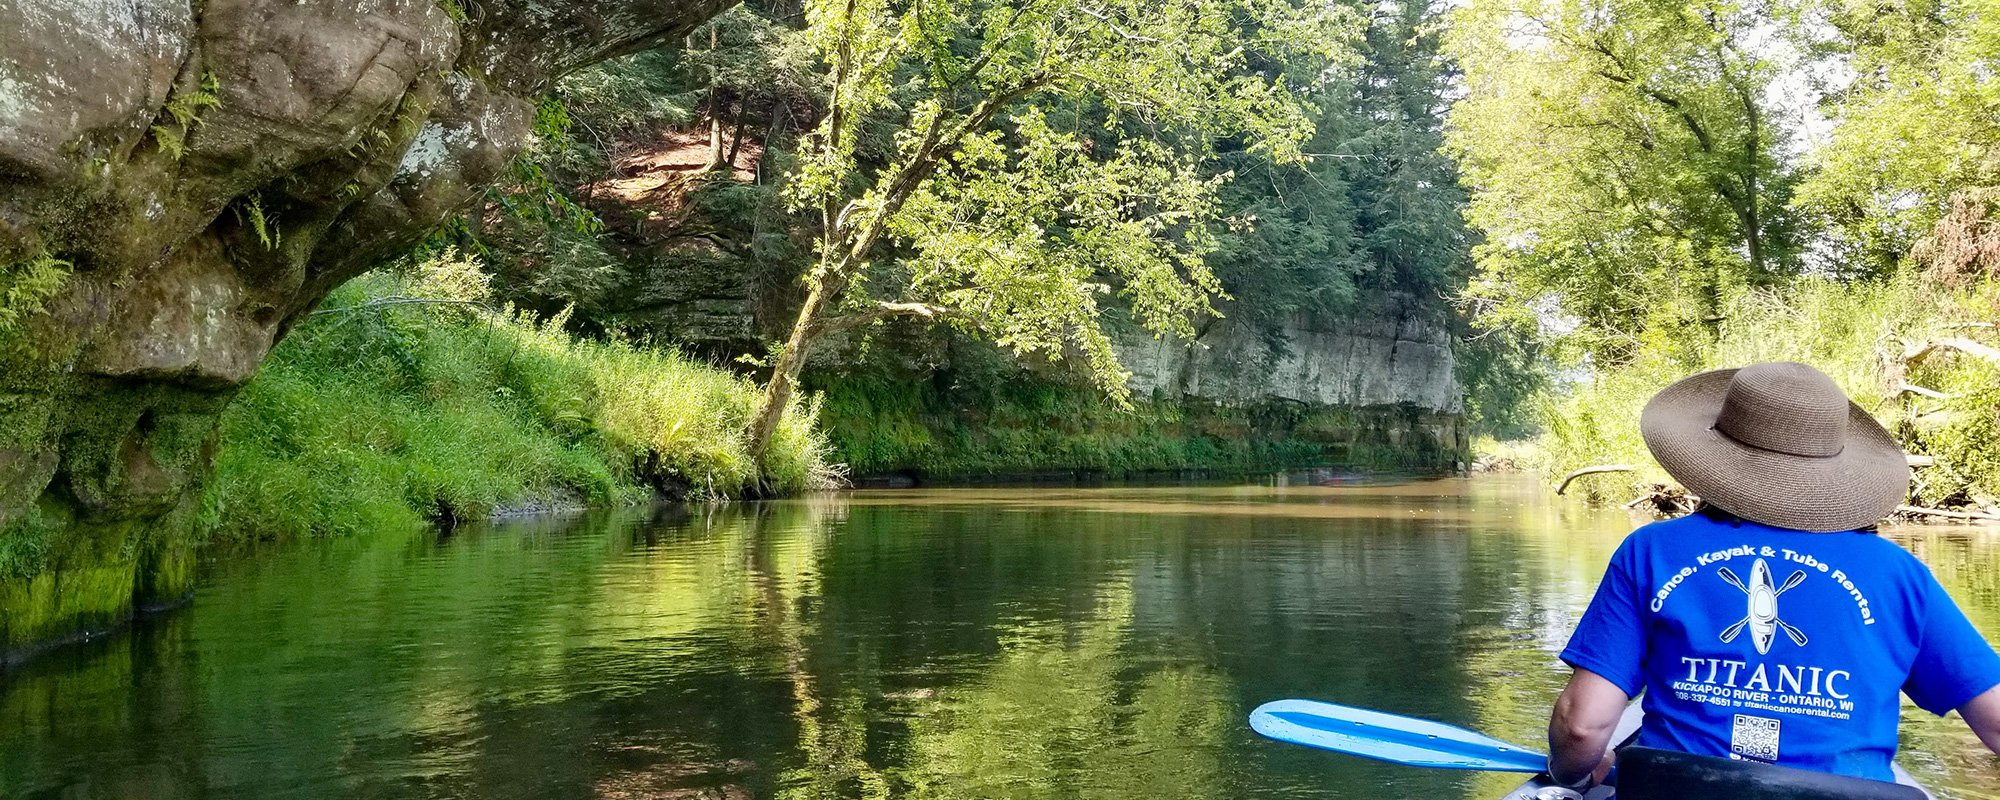 Canoe, Kayak & Tube on the Beautiful Kickapoo River - Ontario WI!